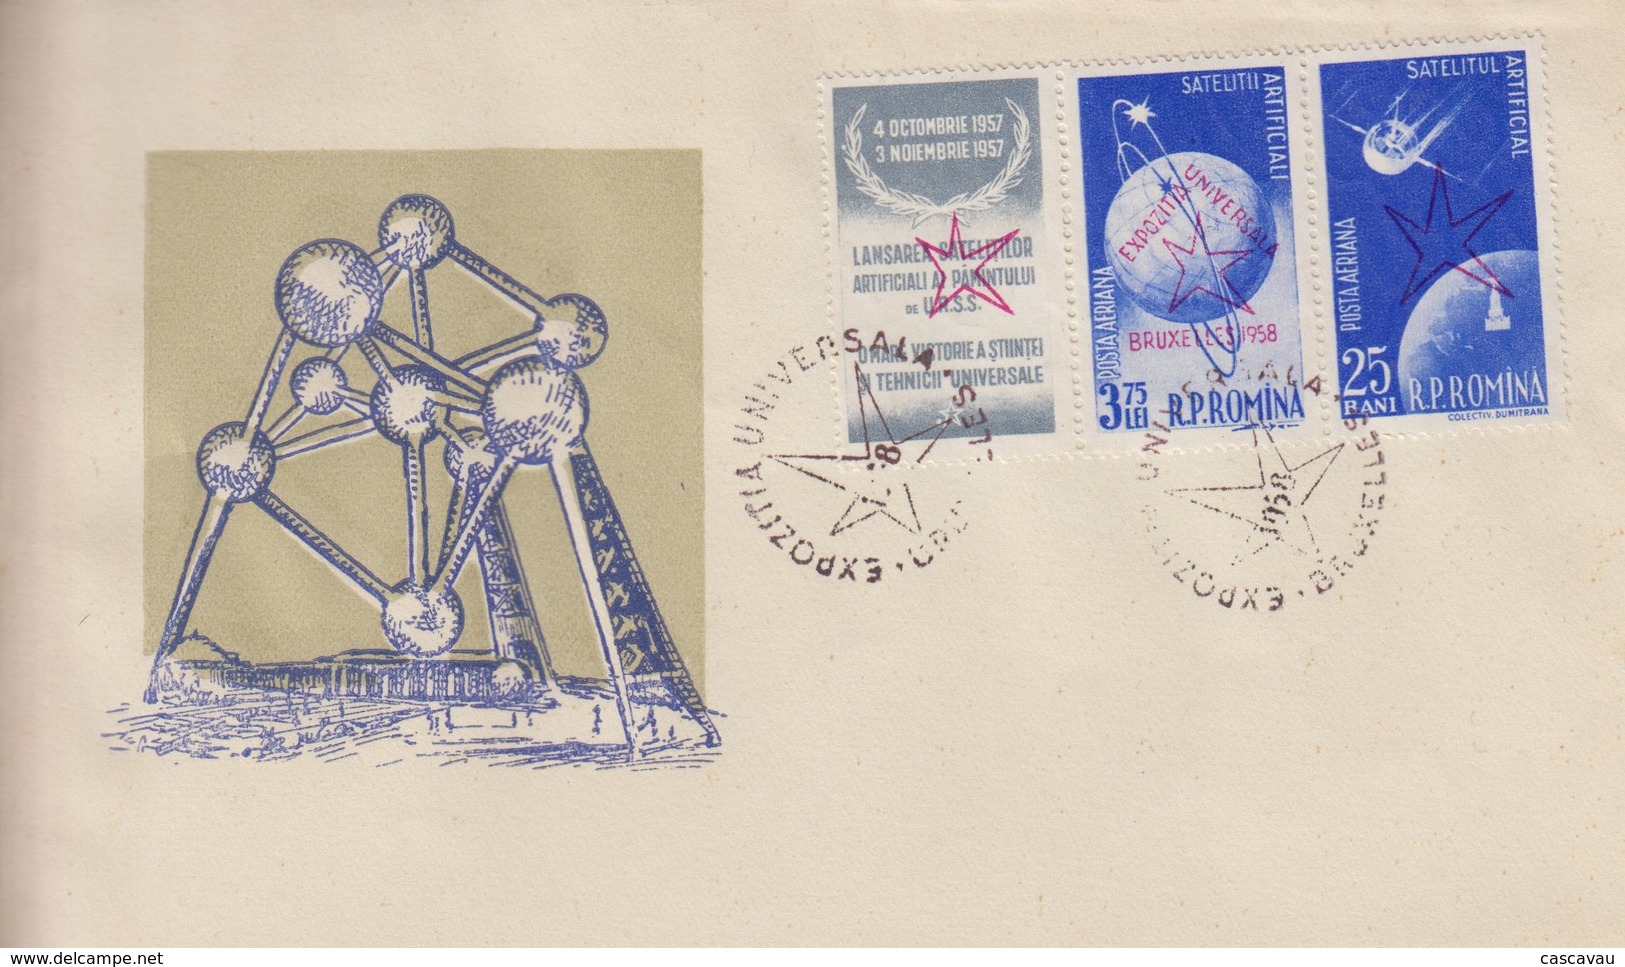 Enveloppe  FDC  1er Jour   ROUMANIE     Exposition  Universelle  BRUXELLES   1958 - 1958 – Brussels (Belgium)